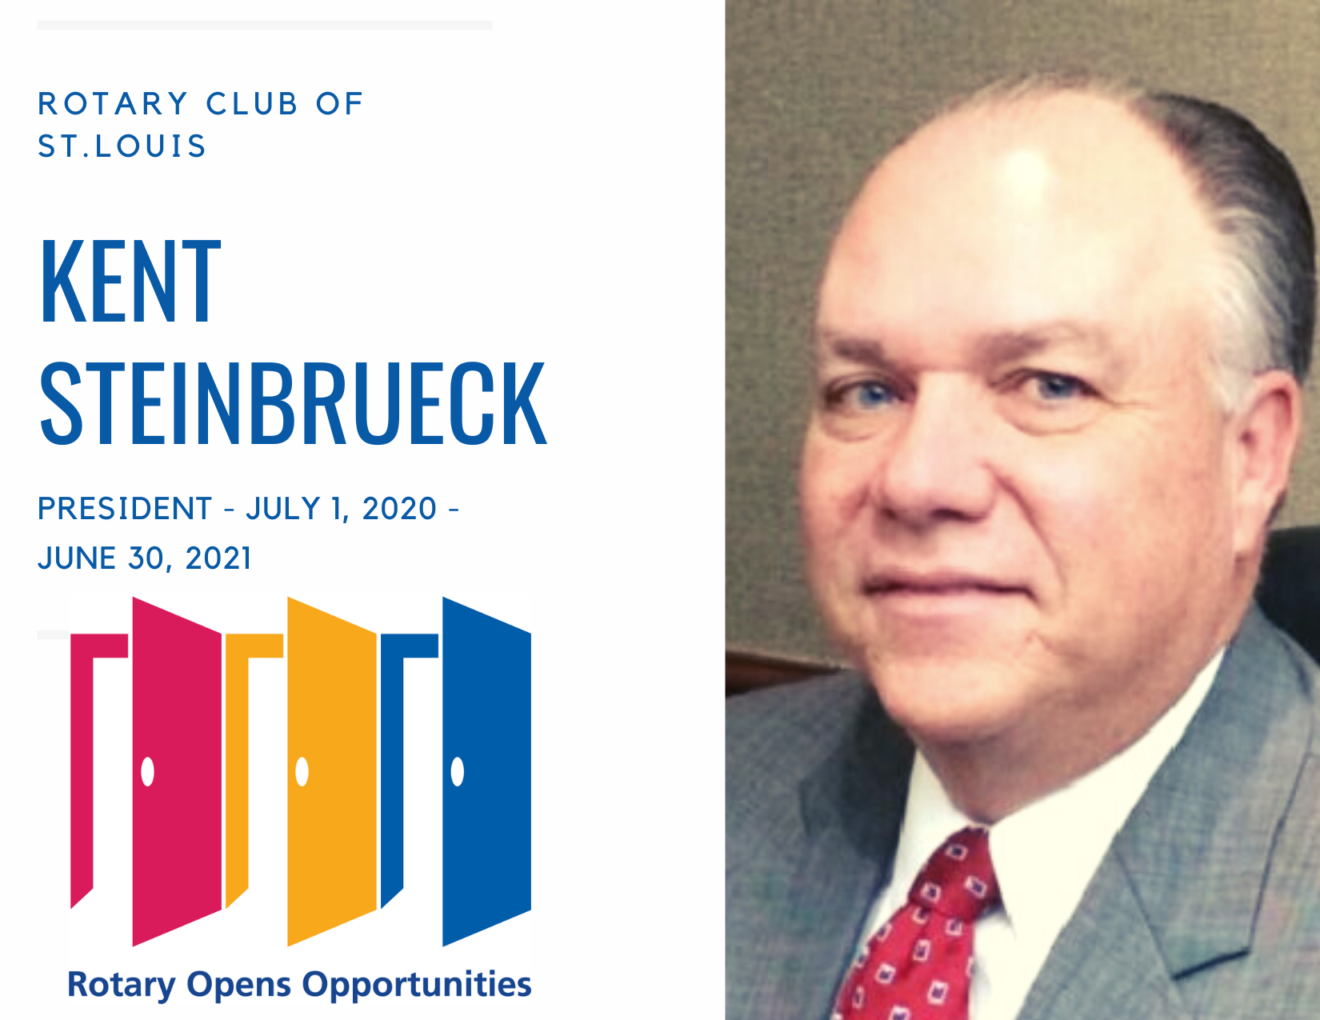 President Kent Steinbrueck - Rotary Club of St. Louis, July 1, 2020 - June 30, 2021